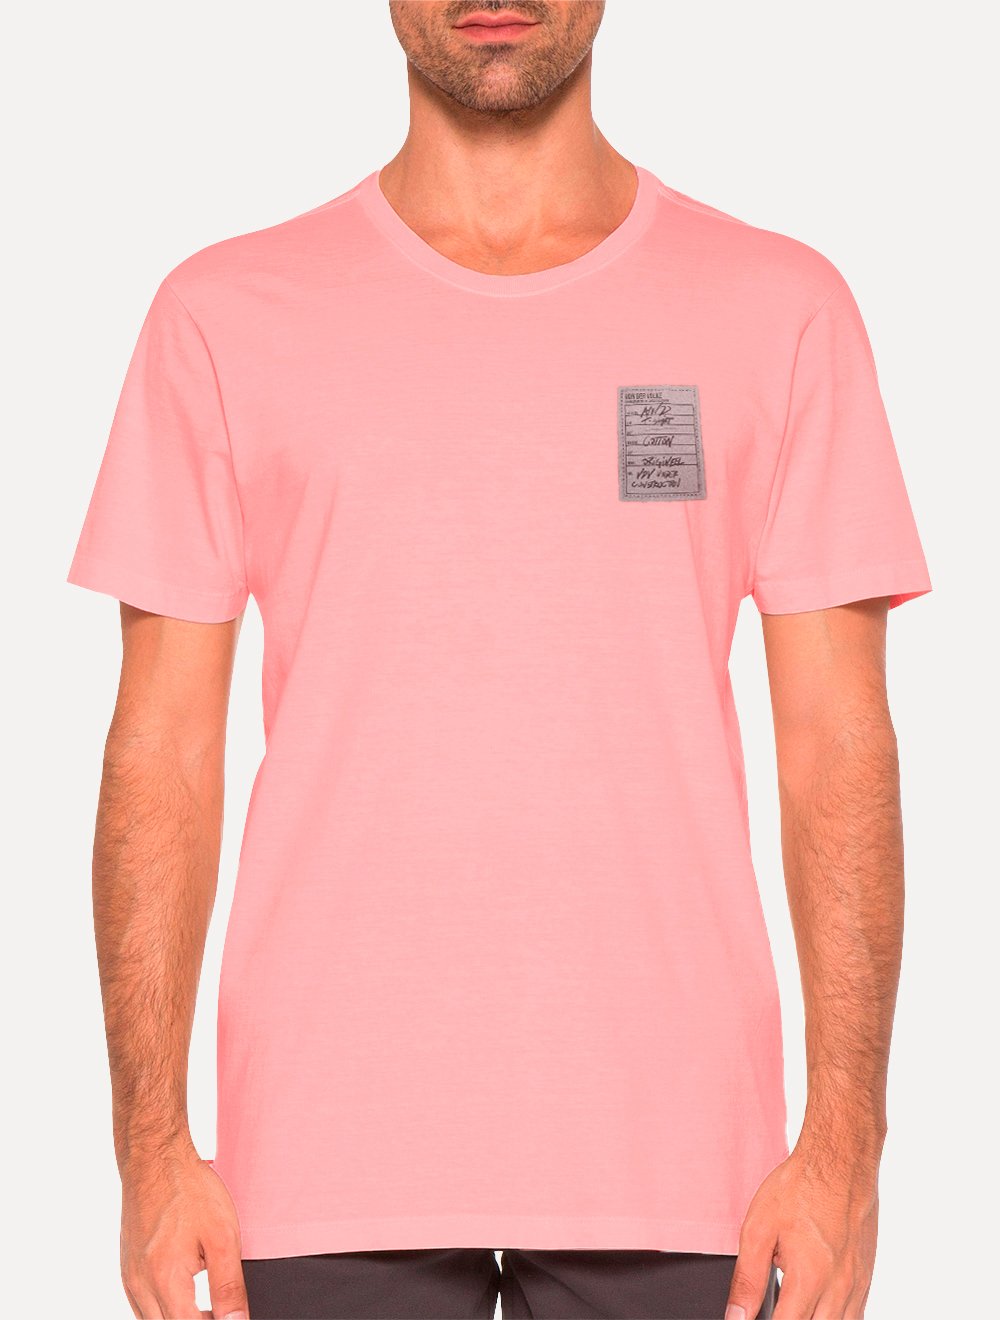 Camiseta Von der Volke Masculina Origineel Tag Rosa